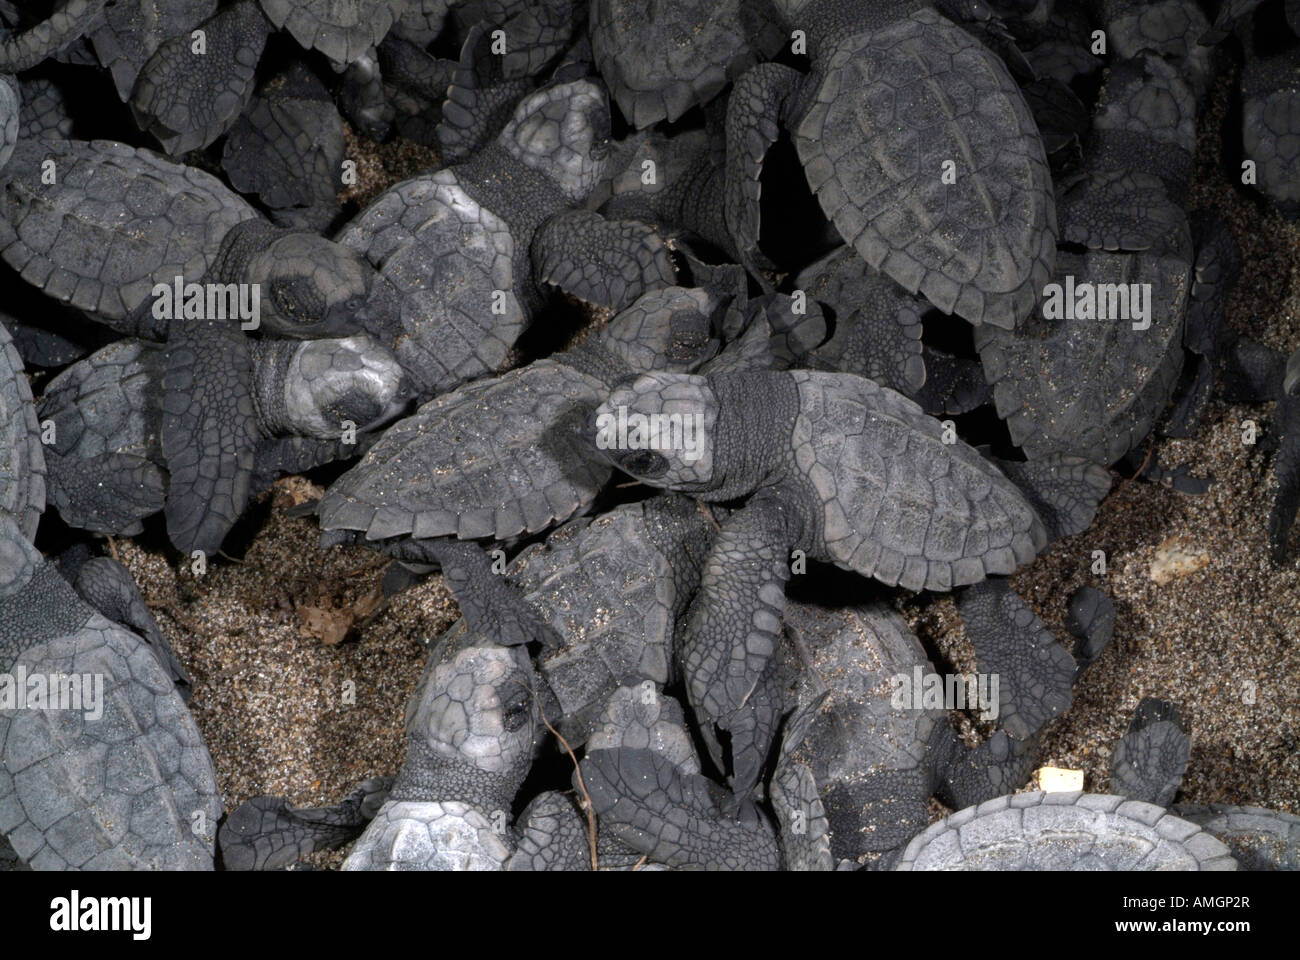 Messico, Chiapas, Boca del Cielo Turtle Research Station, Hatchling Olive Ridley tartarughe di mare Foto Stock